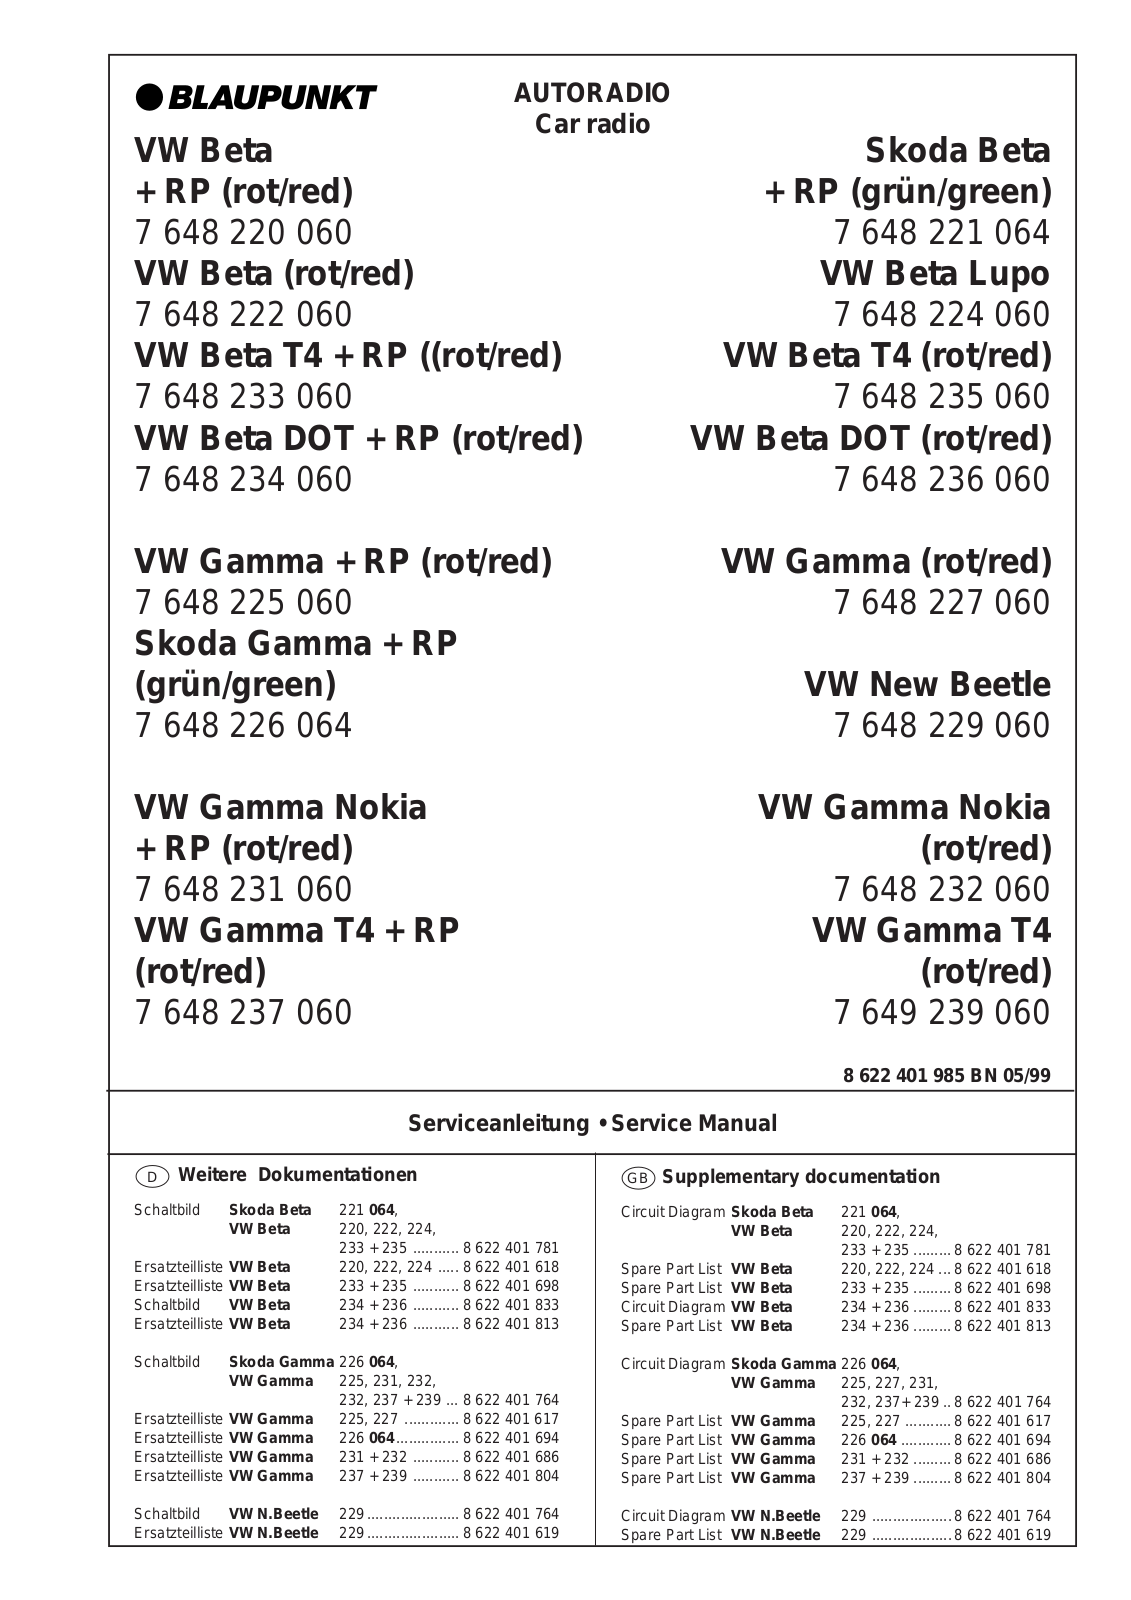 Blaupunkt Skoda Beta + RP, VW New Beetle, VW Gamma, Skoda Gamma + RP, VW Beta Service Manual